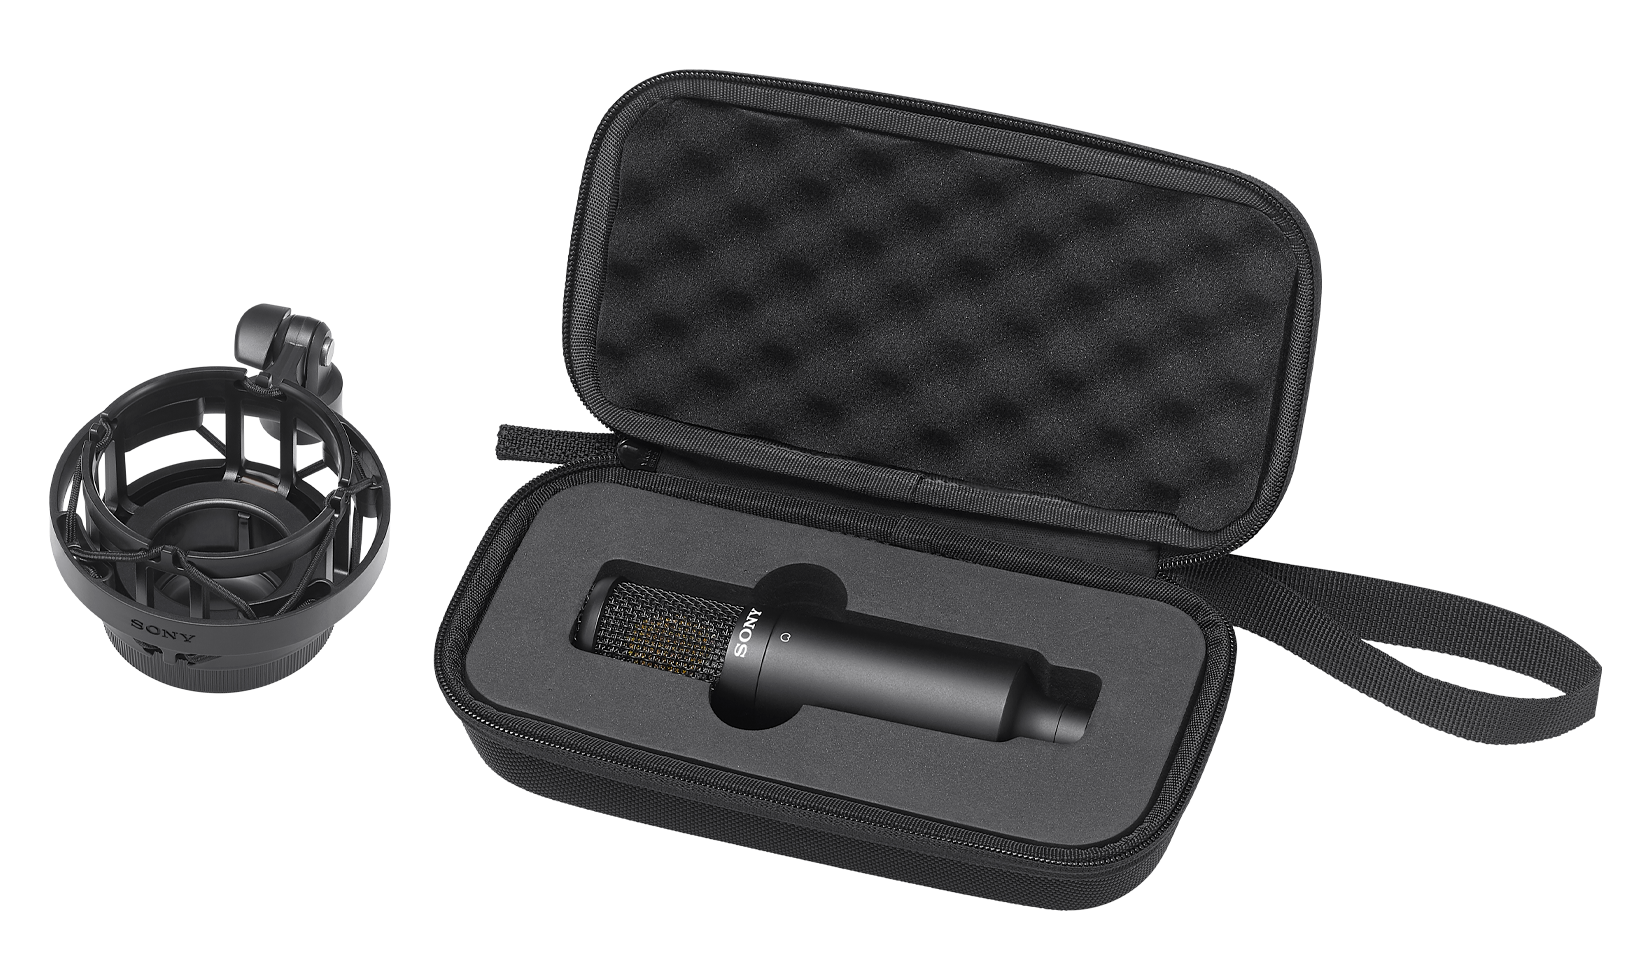 SONY C-80 Uni-directional Dual Diaphragm Condenser Microphone for Home Studio Recording